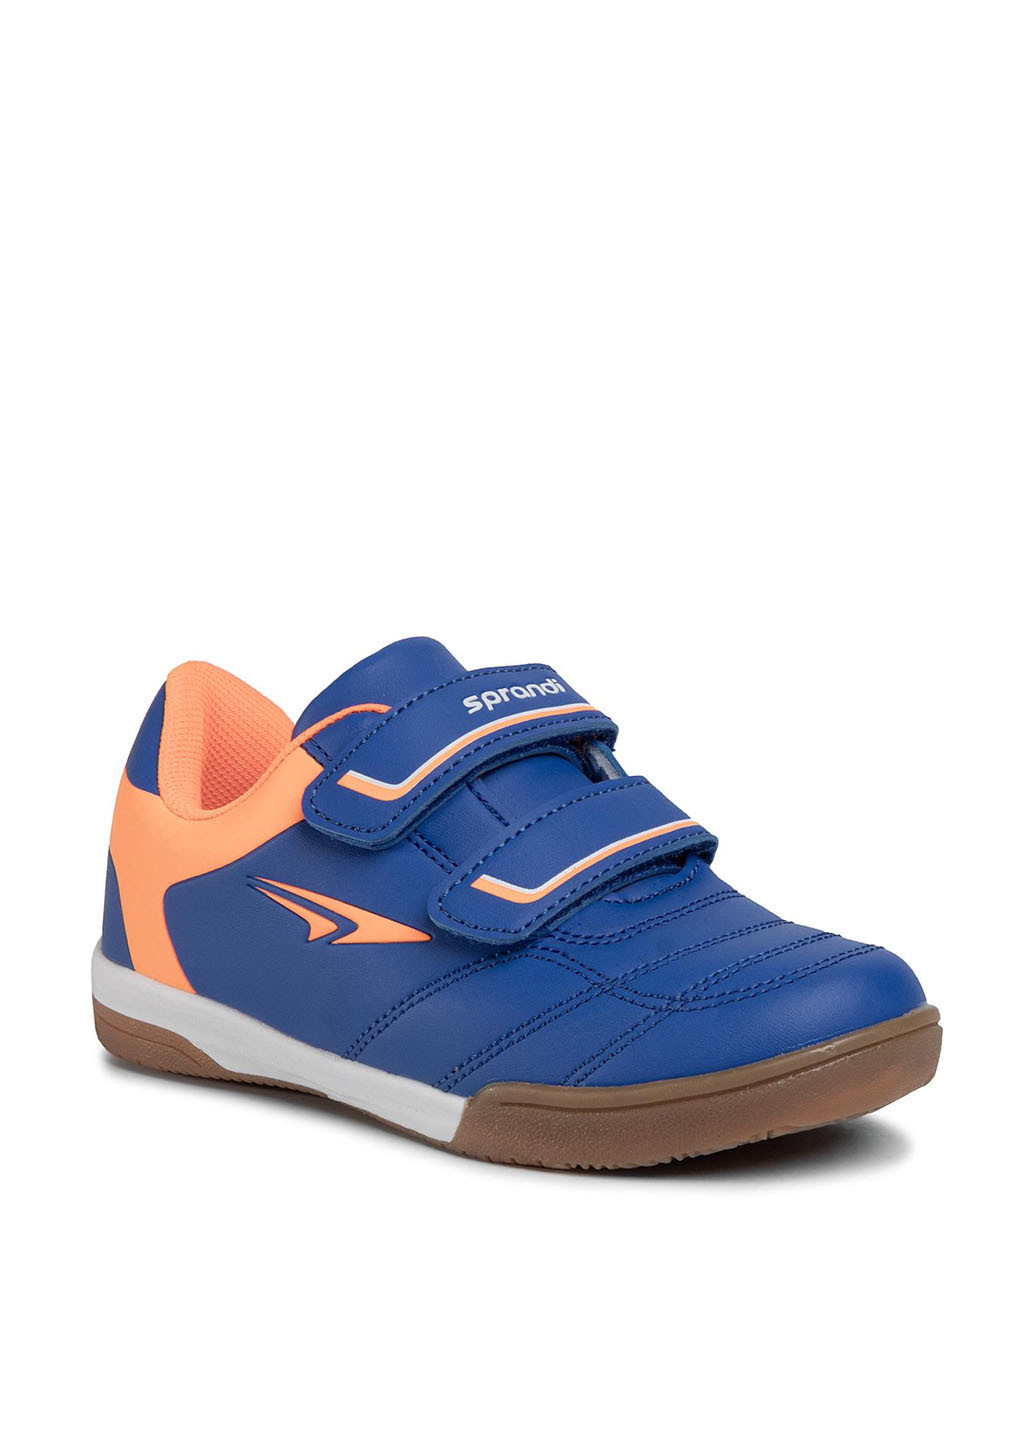 Синие демисезонные кросівки Sprandi CP70-18336